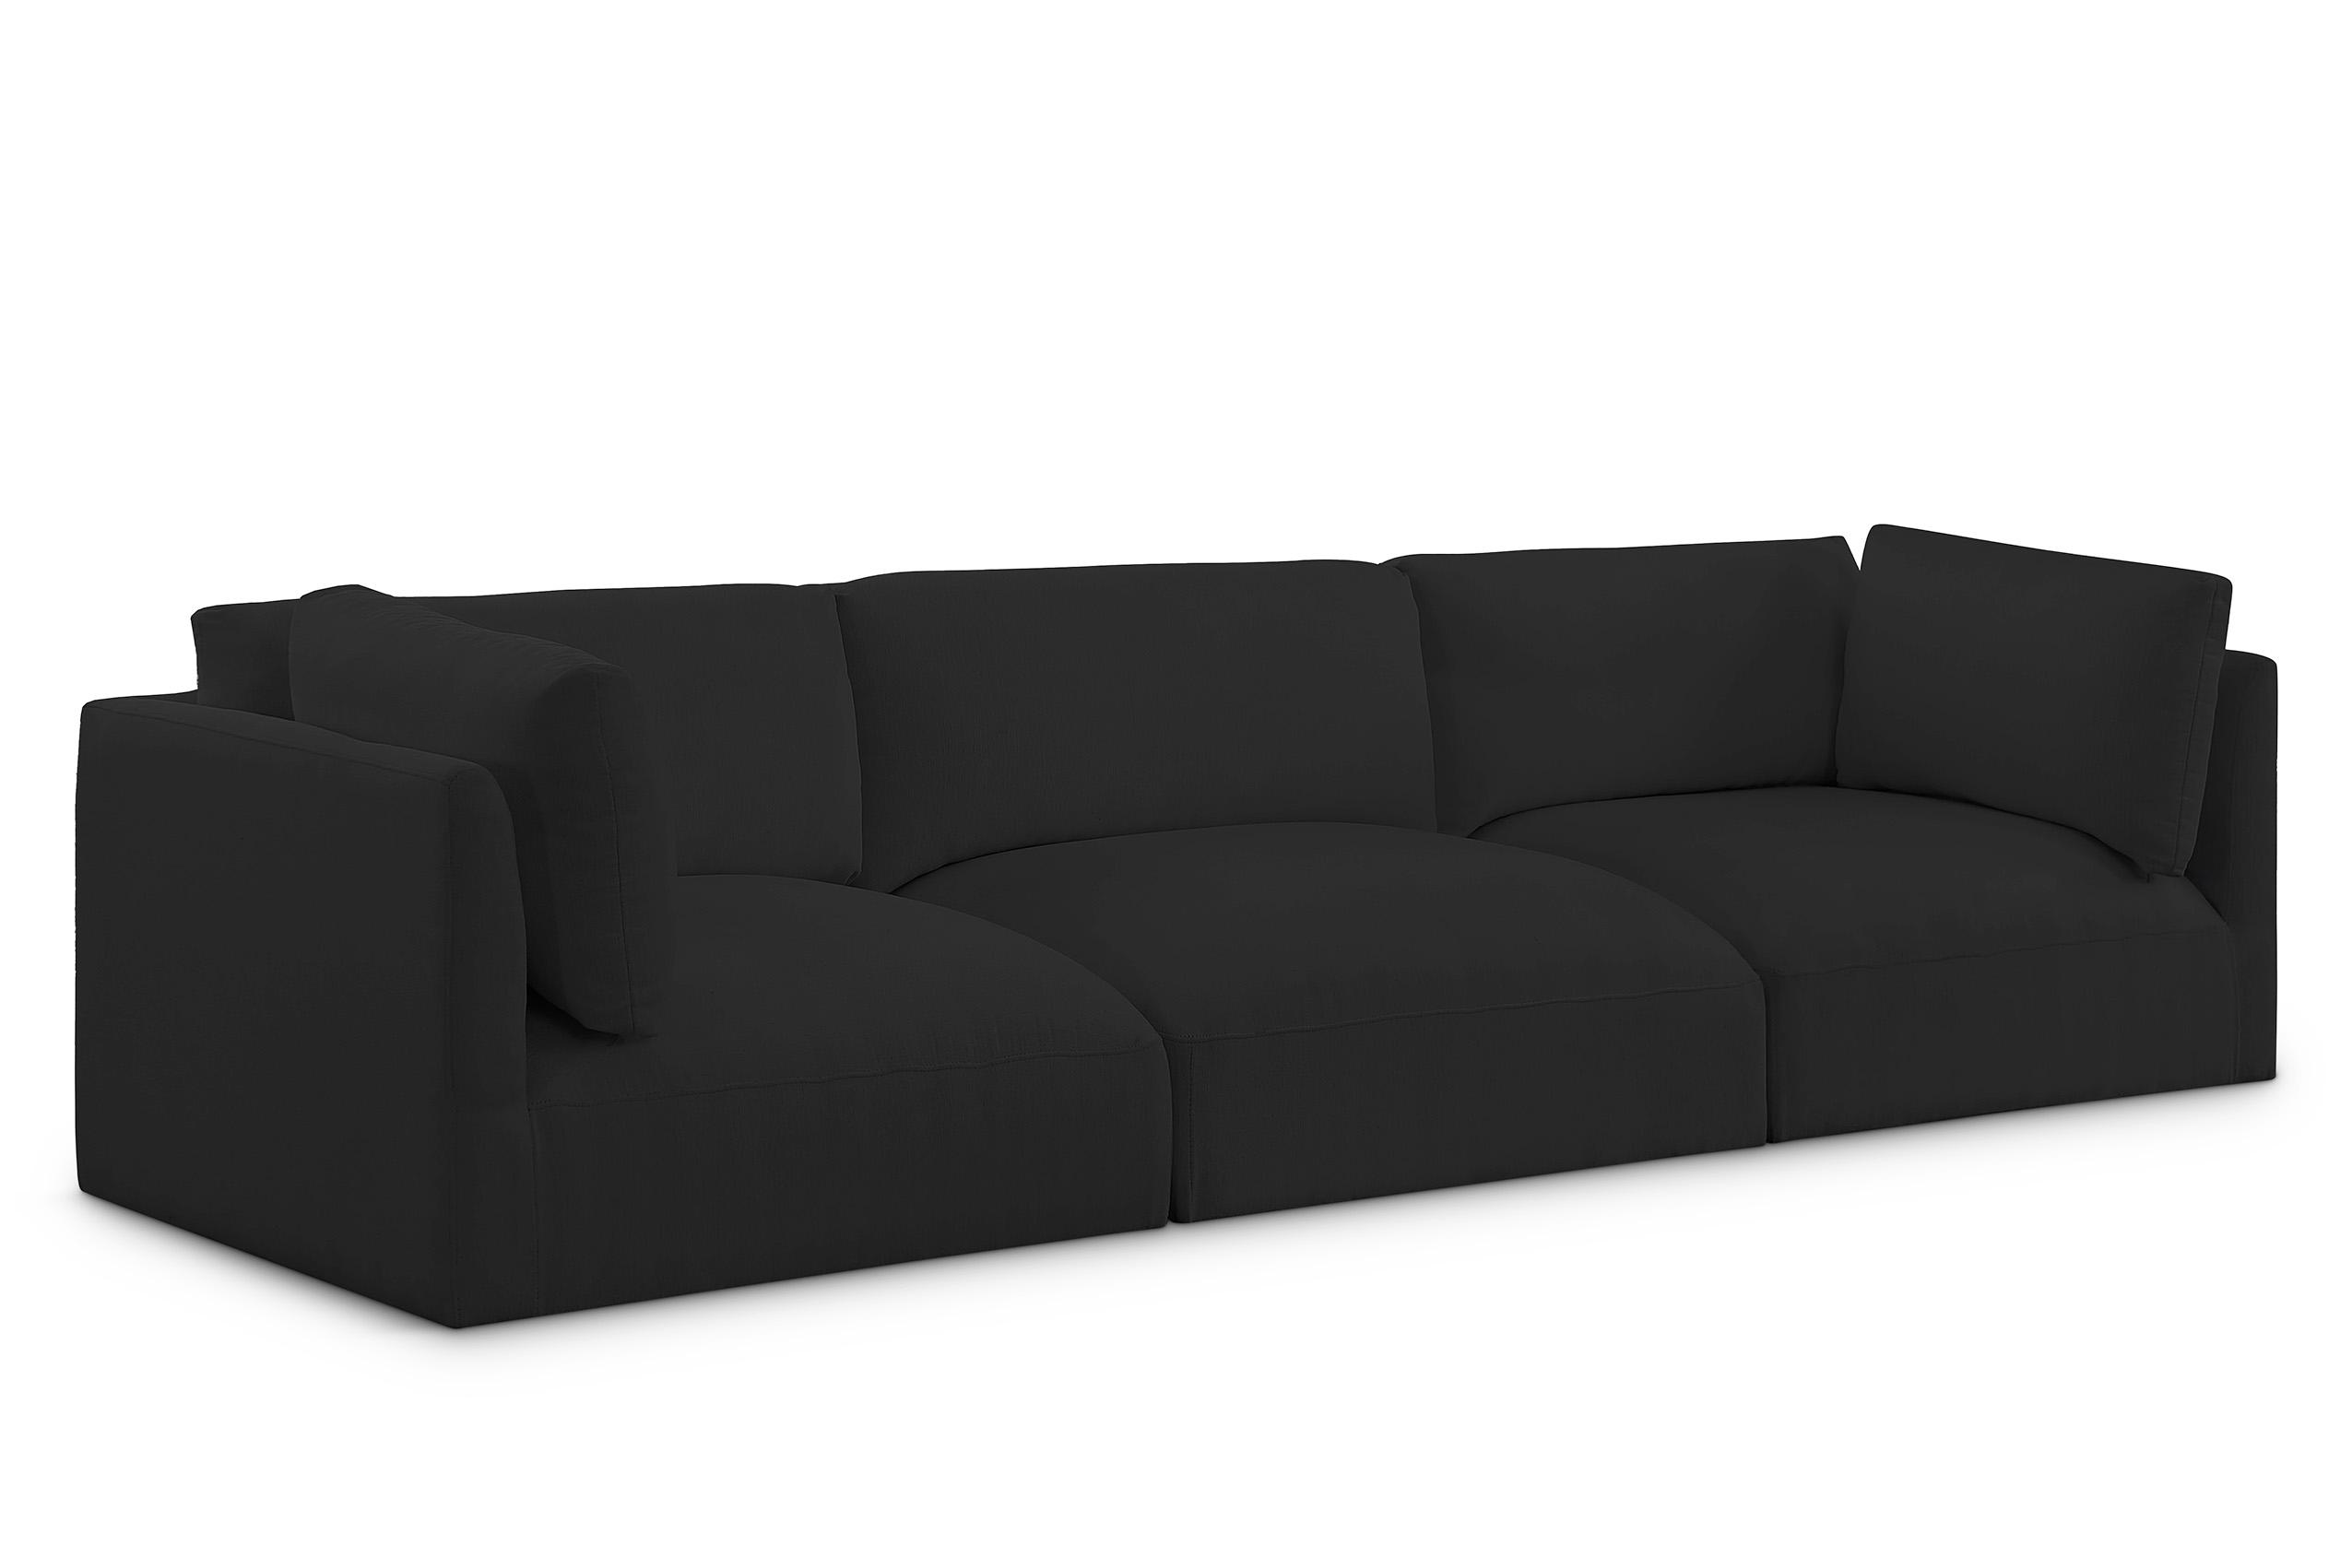 Contemporary, Modern Modular Sofa EASE 696Black-S114B 696Black-S114B in Black Fabric